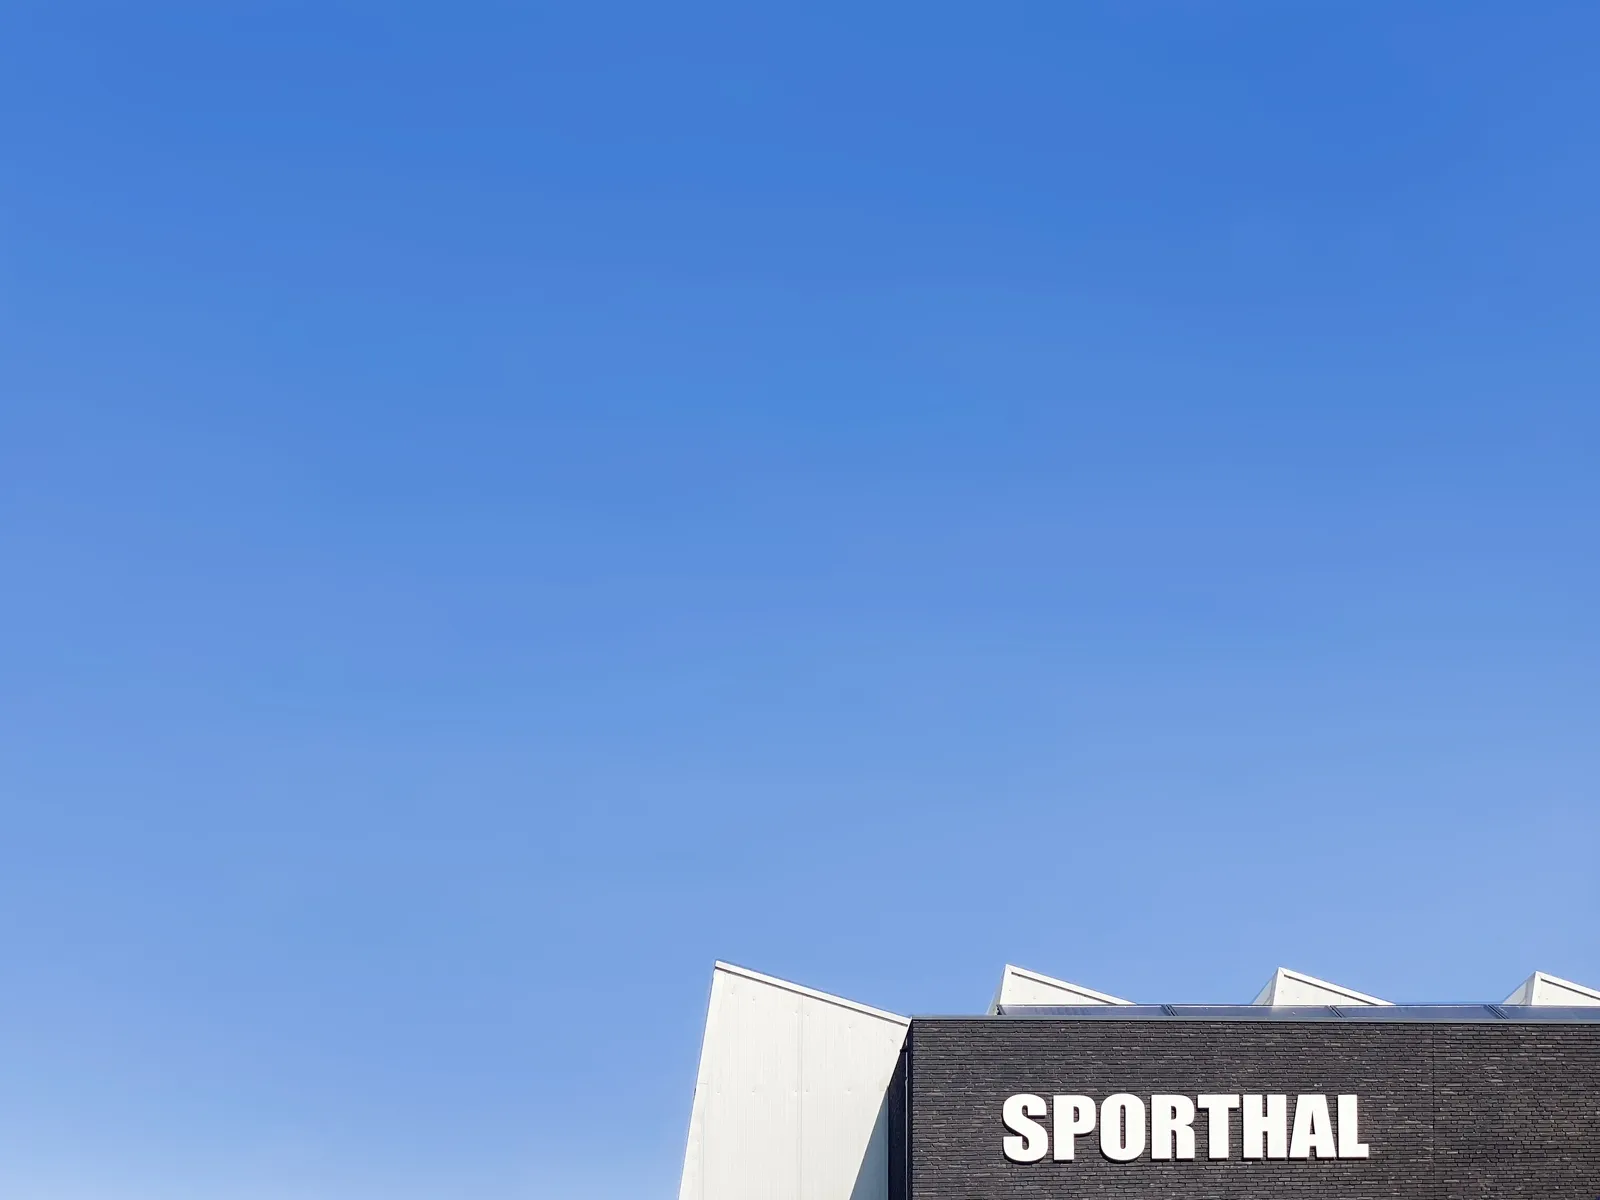 Sporthal